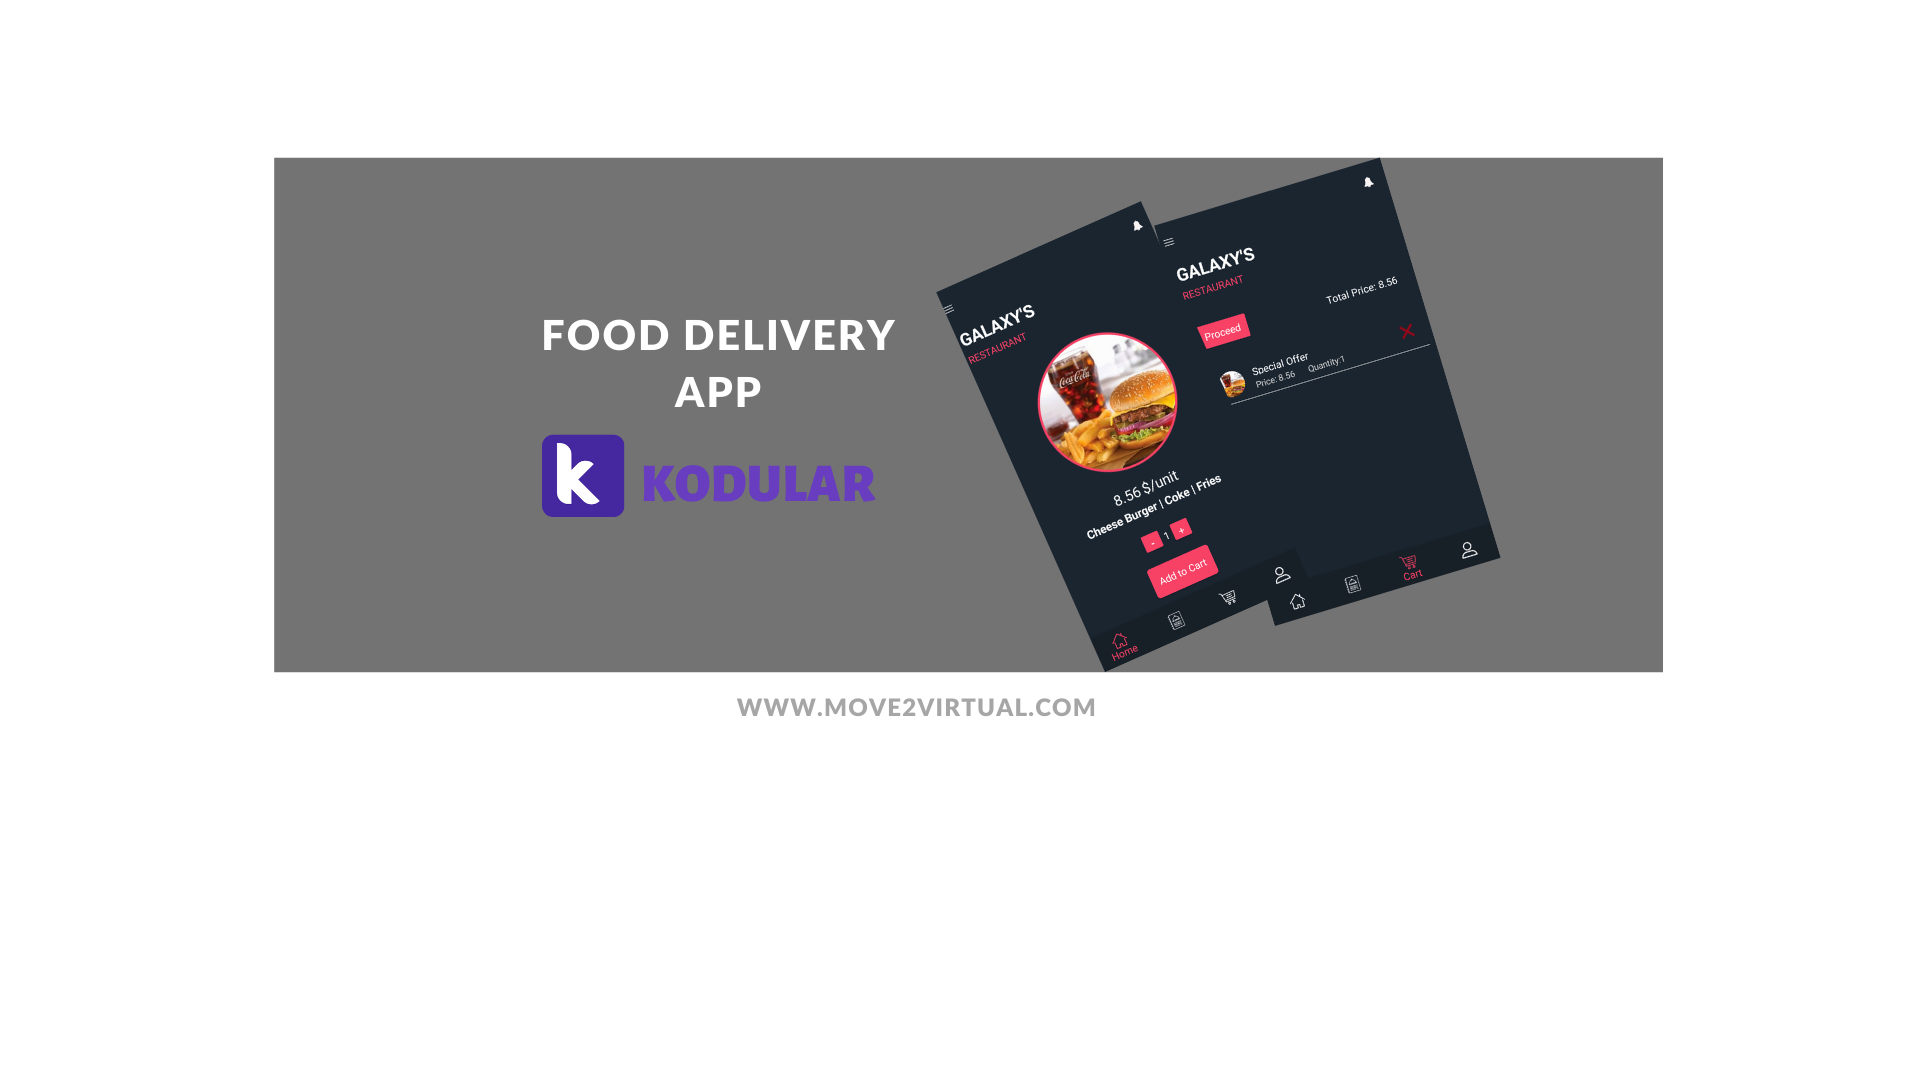 https://movetovirtual.blogspot.com/2019/10/kodular-food-delivery-app-paid.html